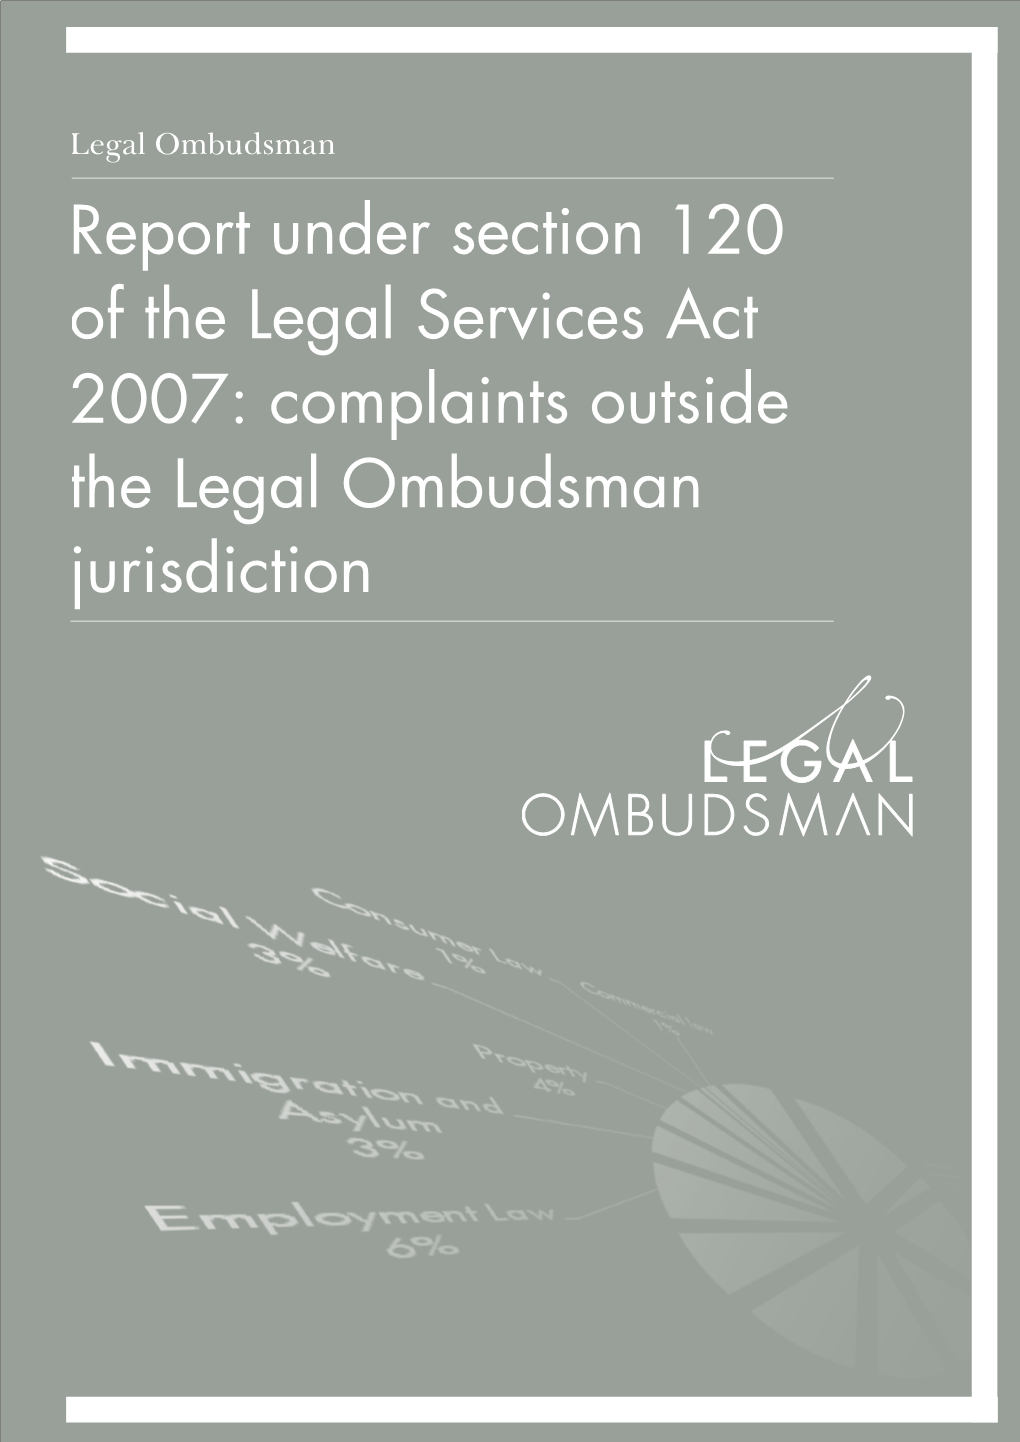 Complaints Outside the Legal Ombudsman Jurisdiction